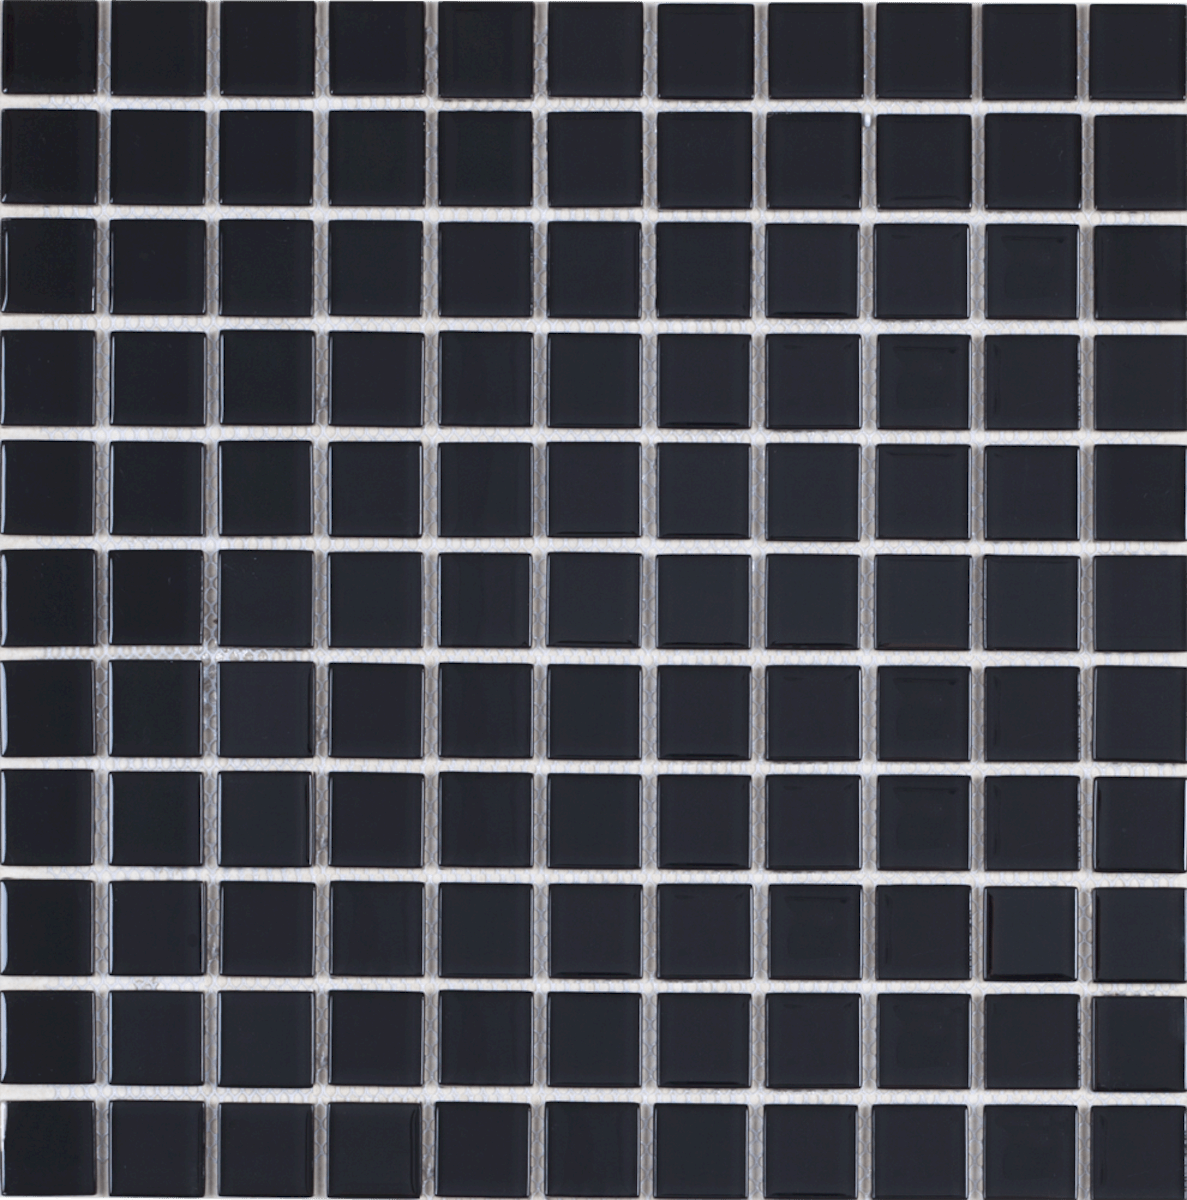 Skleněná mozaika Premium Mosaic černá 30x30 cm lesk MOS25BK Premium Mosaic